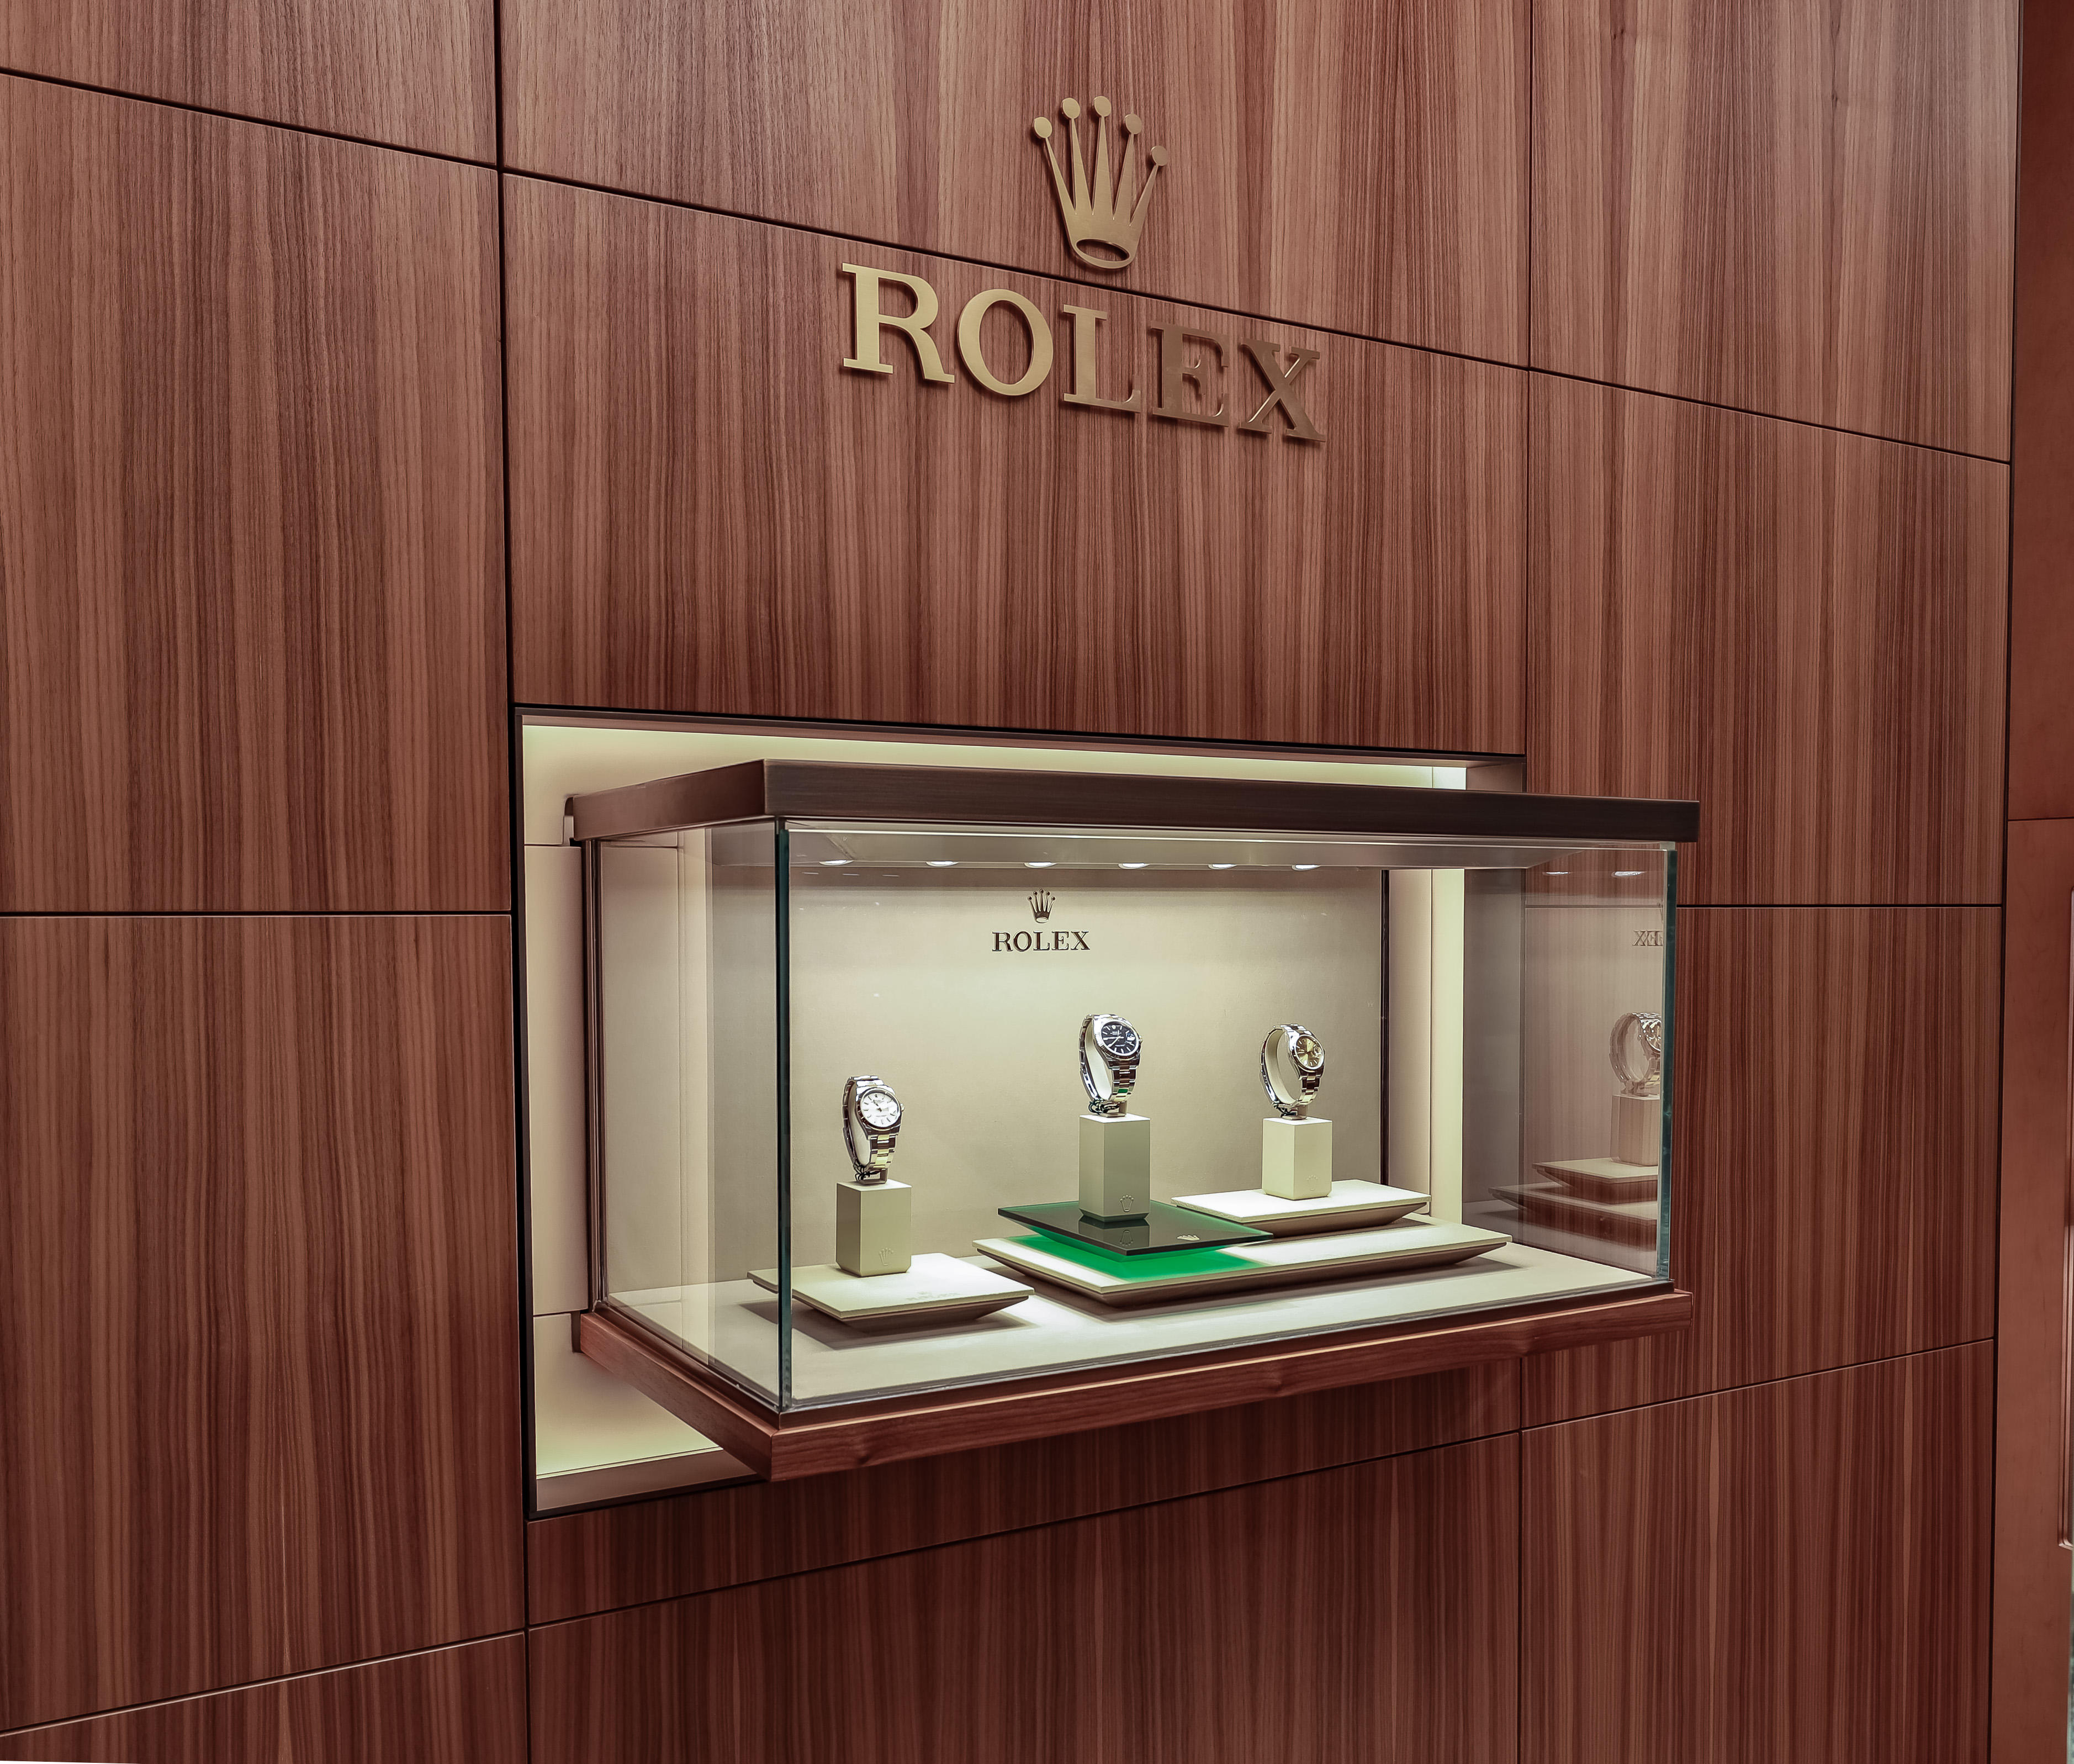 Images Jael Joyería | Official Rolex Retailer